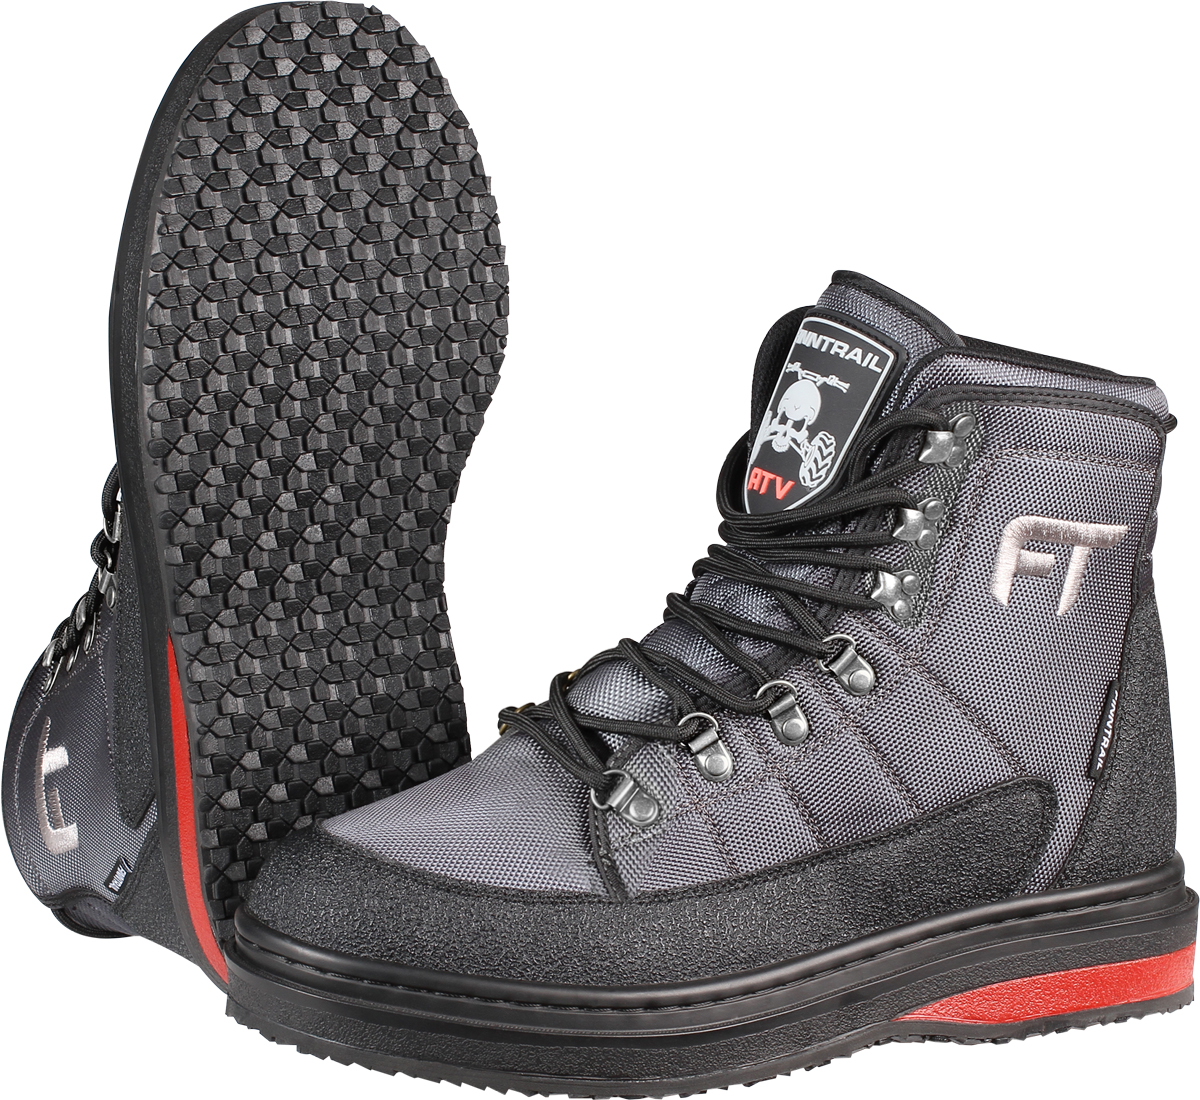 Ботинки для рыбалки Finntrail Runner, цвет: серый, черный, красный. 5221. Размер 45